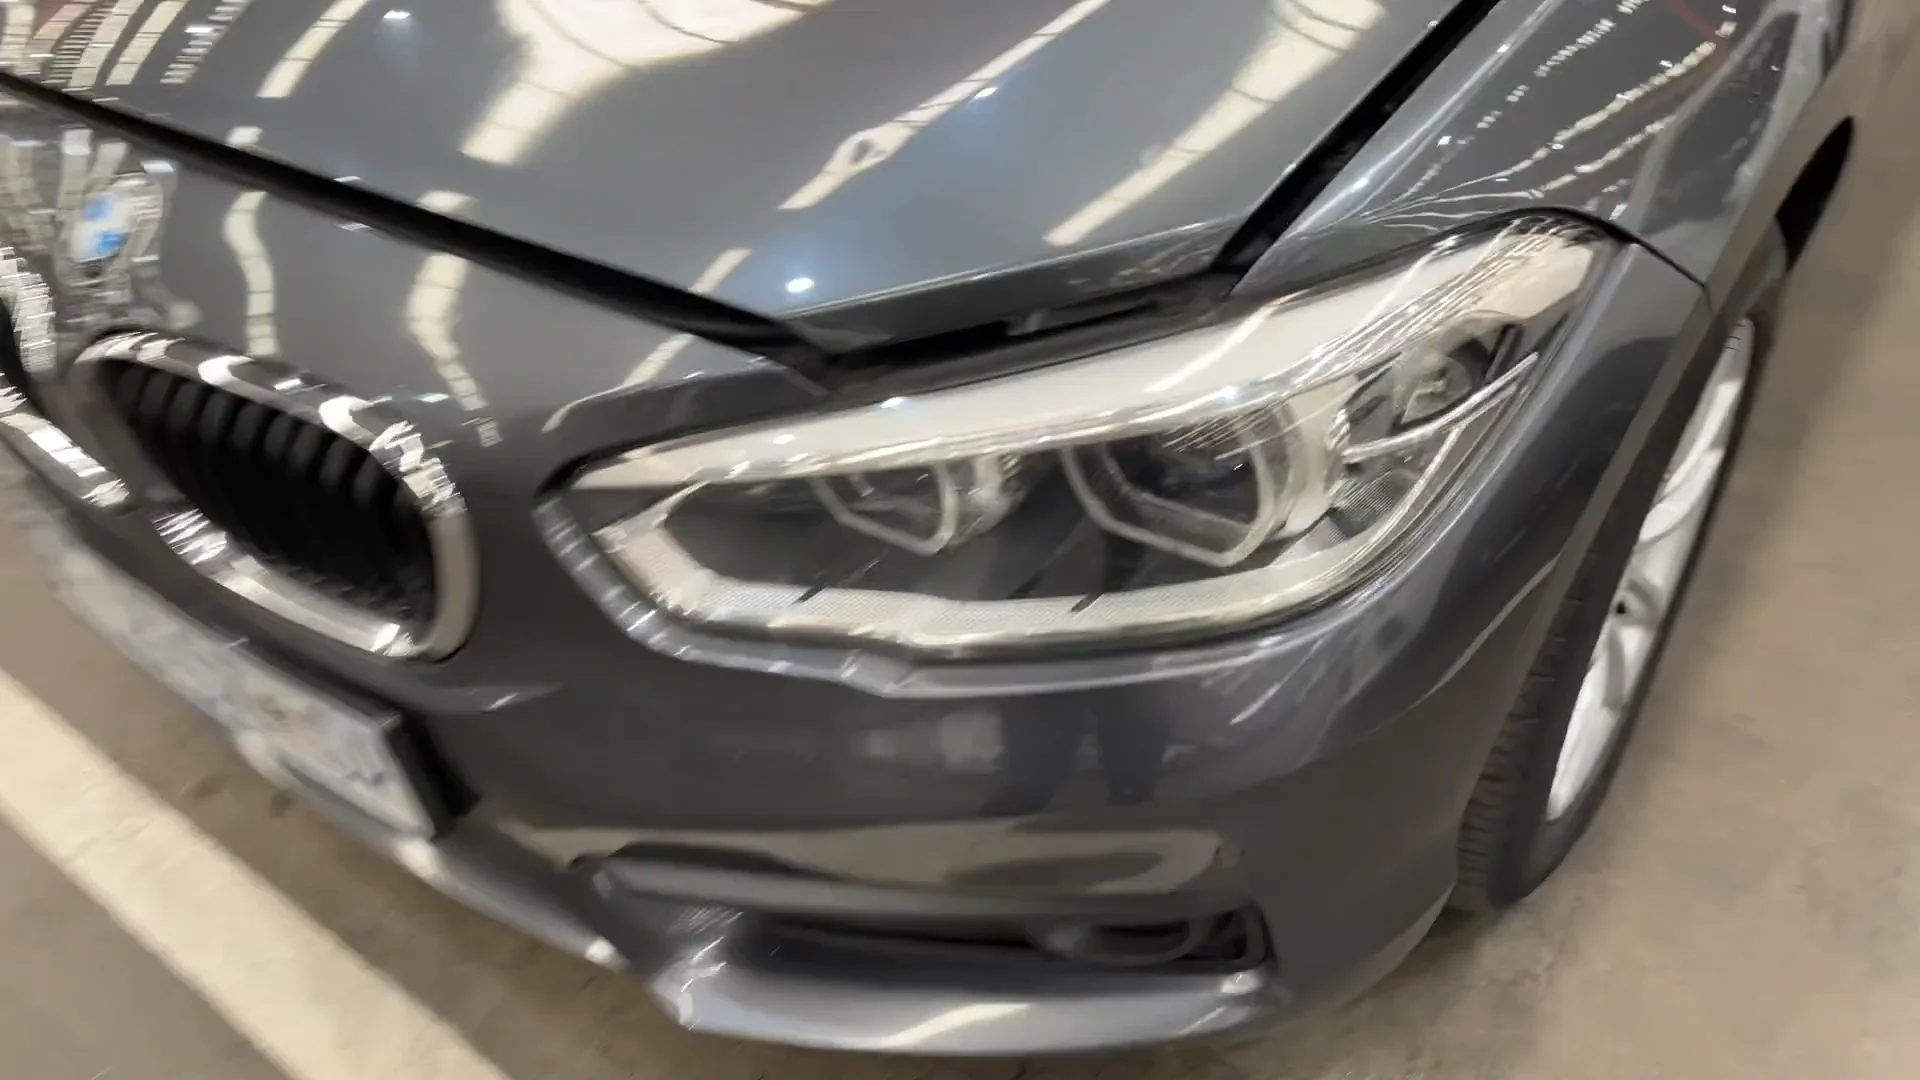 2016 BMW 1 Series 120d 5-Door Auto (F20) on Vimeo